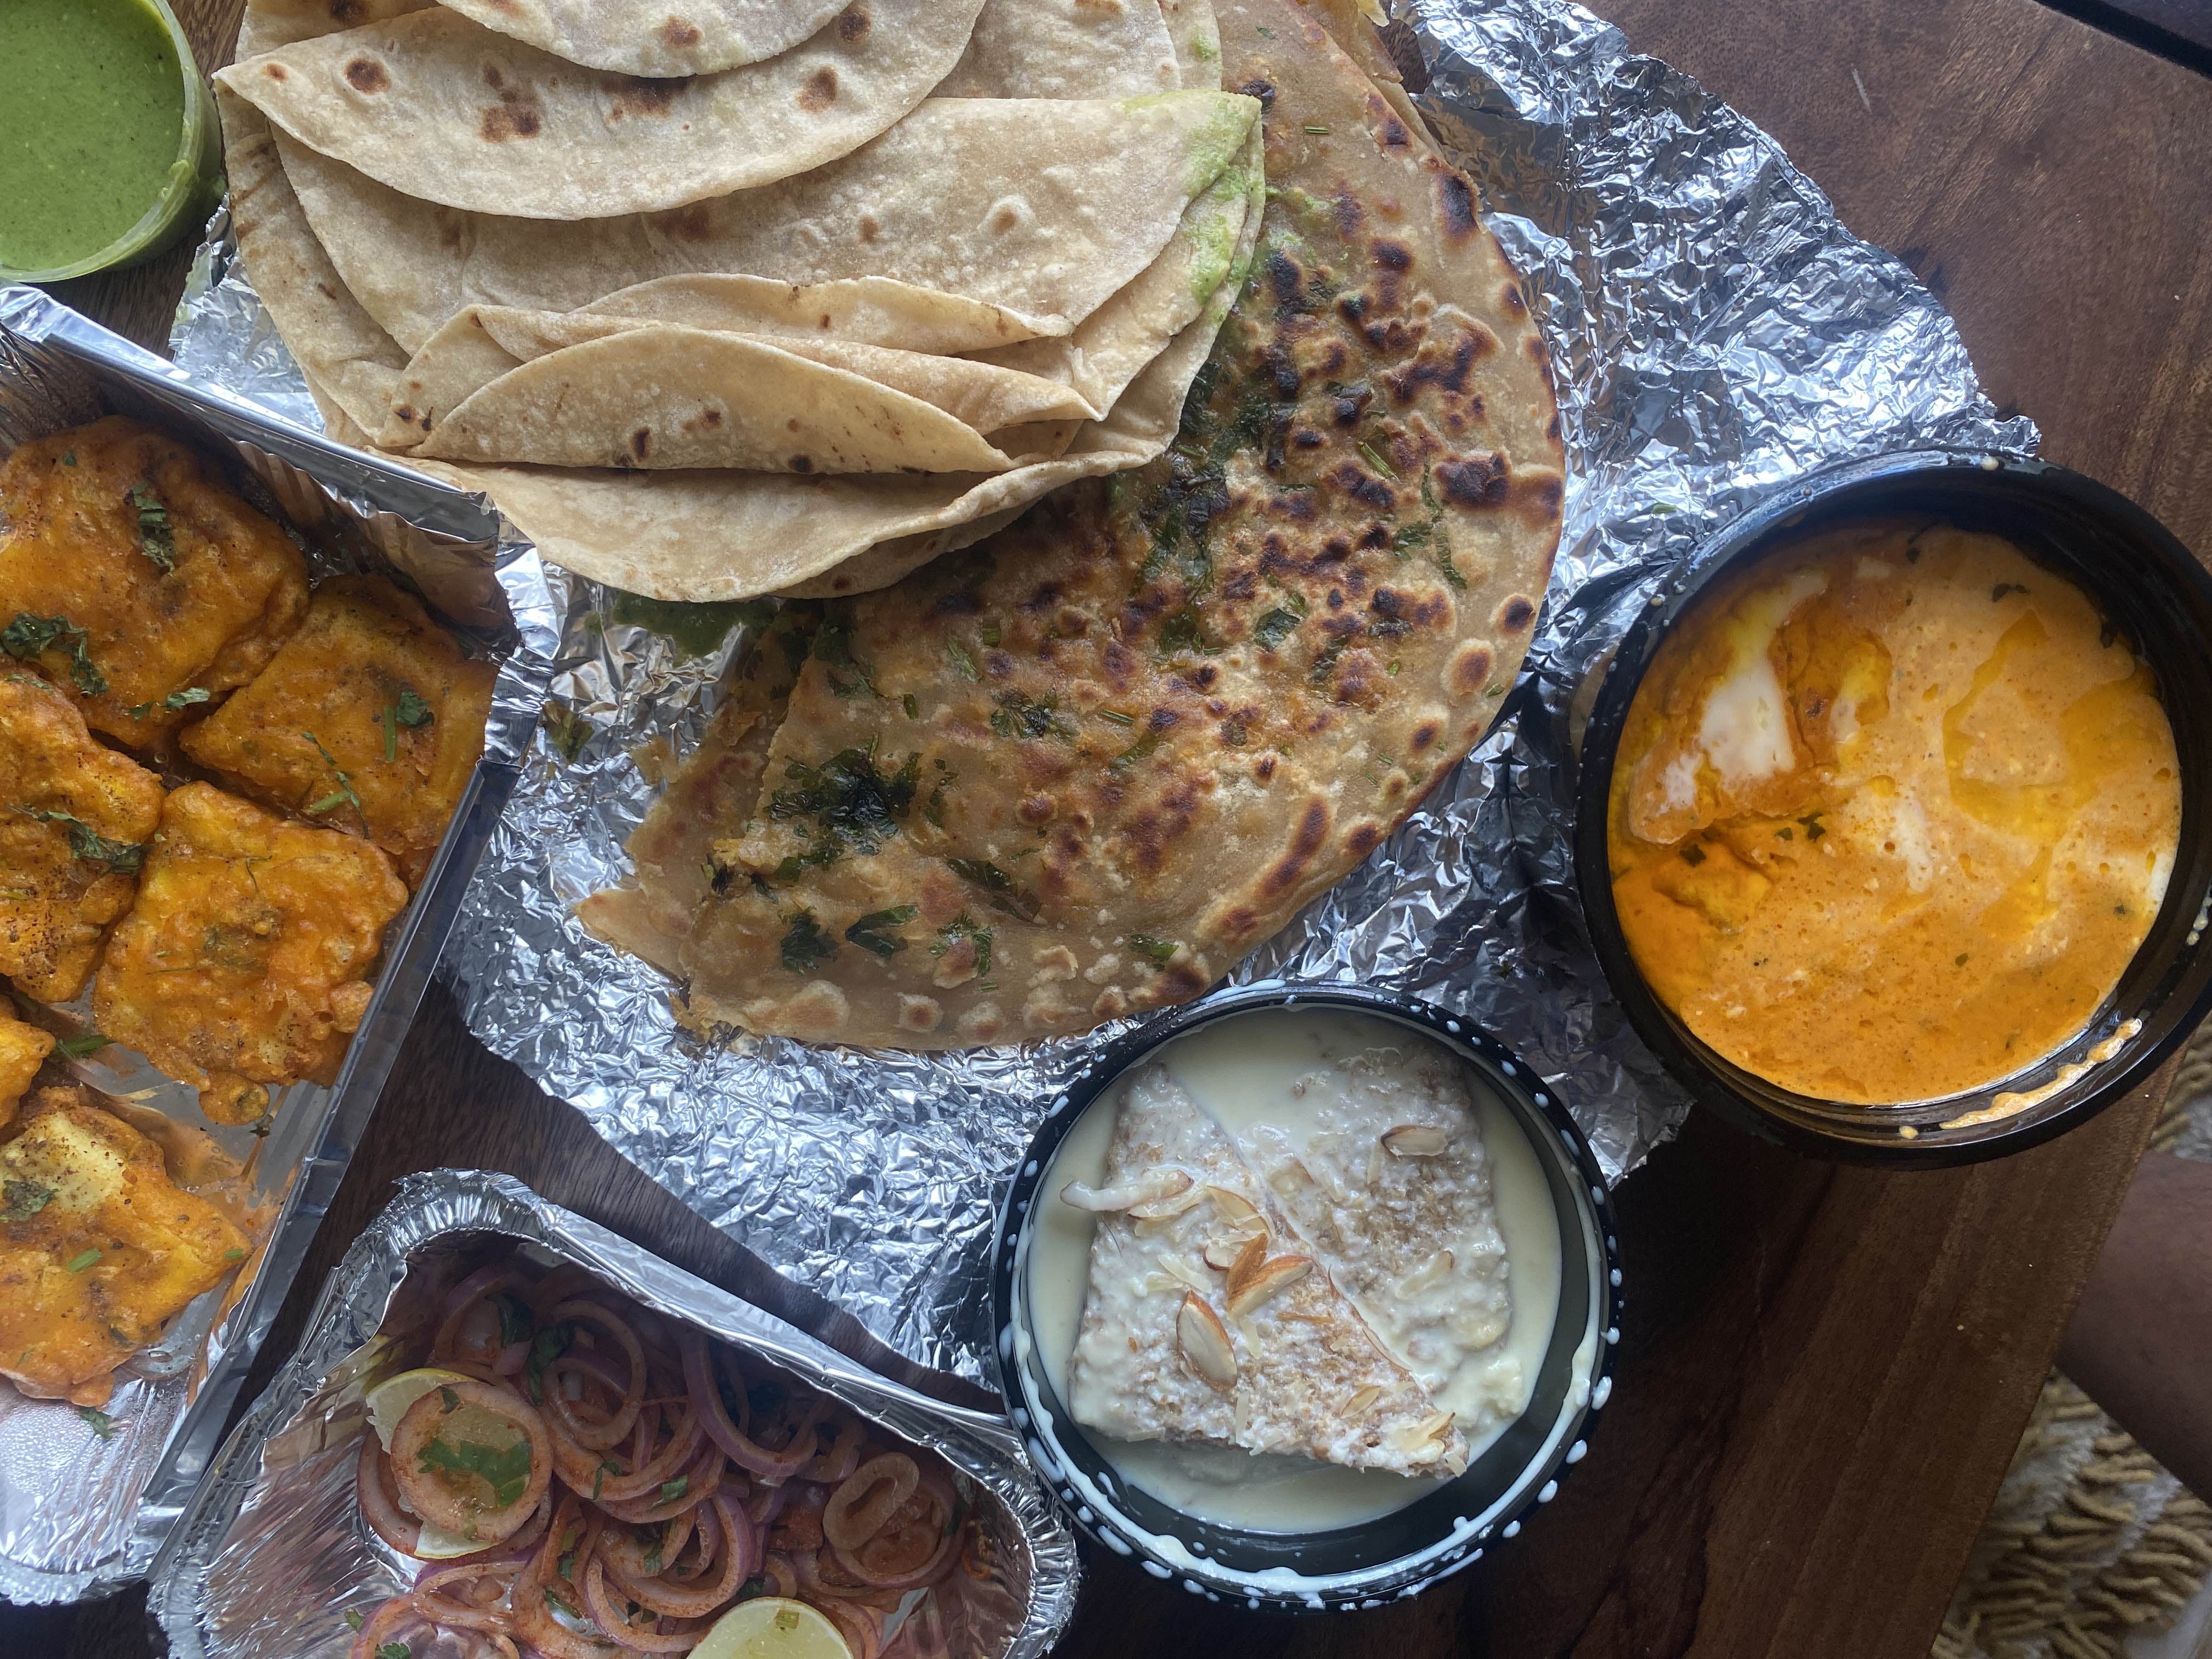 Dish,Food,Cuisine,Ingredient,Produce,Roti,Paratha,Staple food,Naan,Indian cuisine